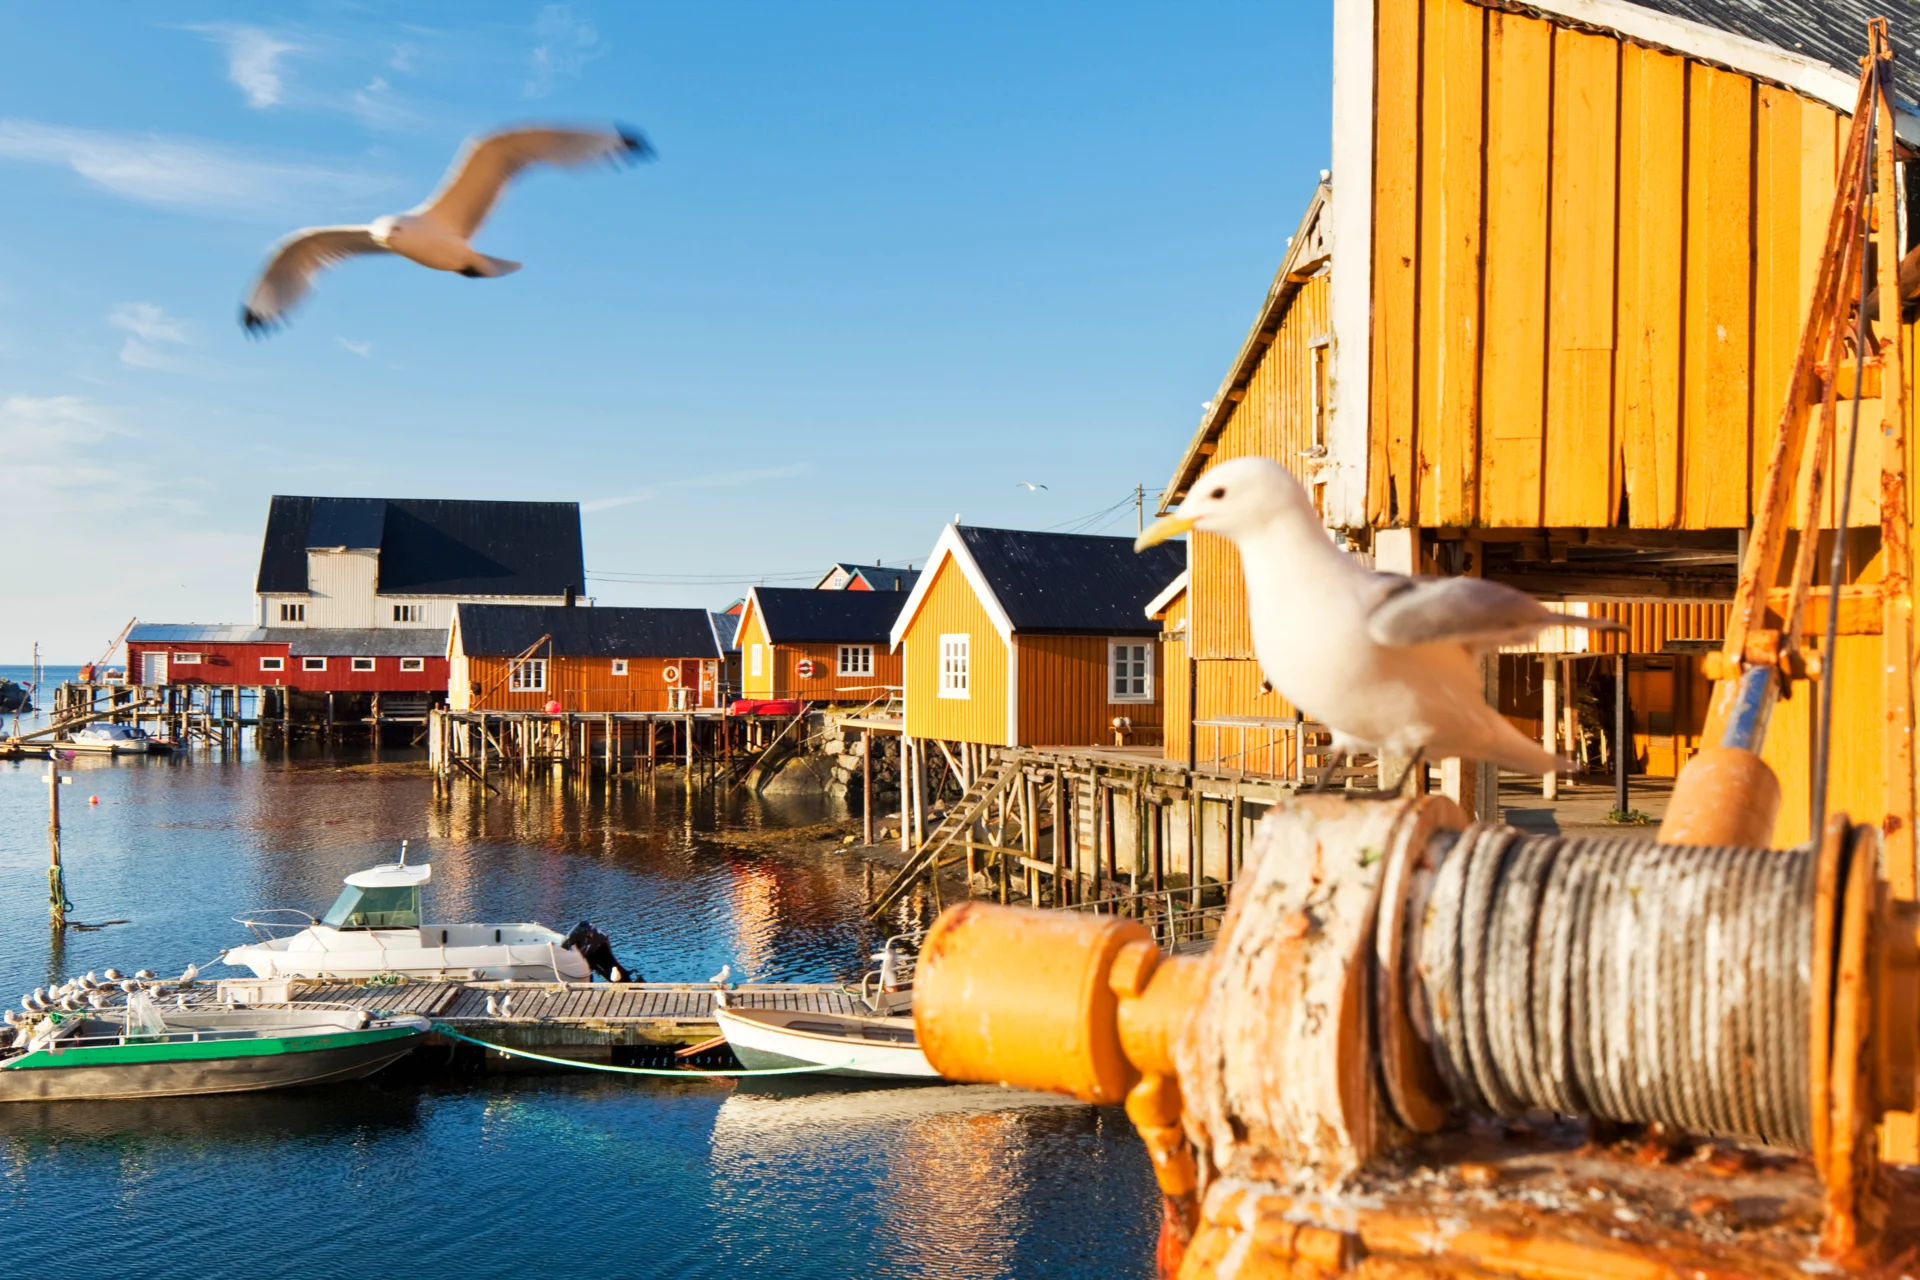 day-6-reine-in-lofoten-seagulls-by-the-fisherman-s-cabins-shutterstock-10938426-photo shutterstock 1920